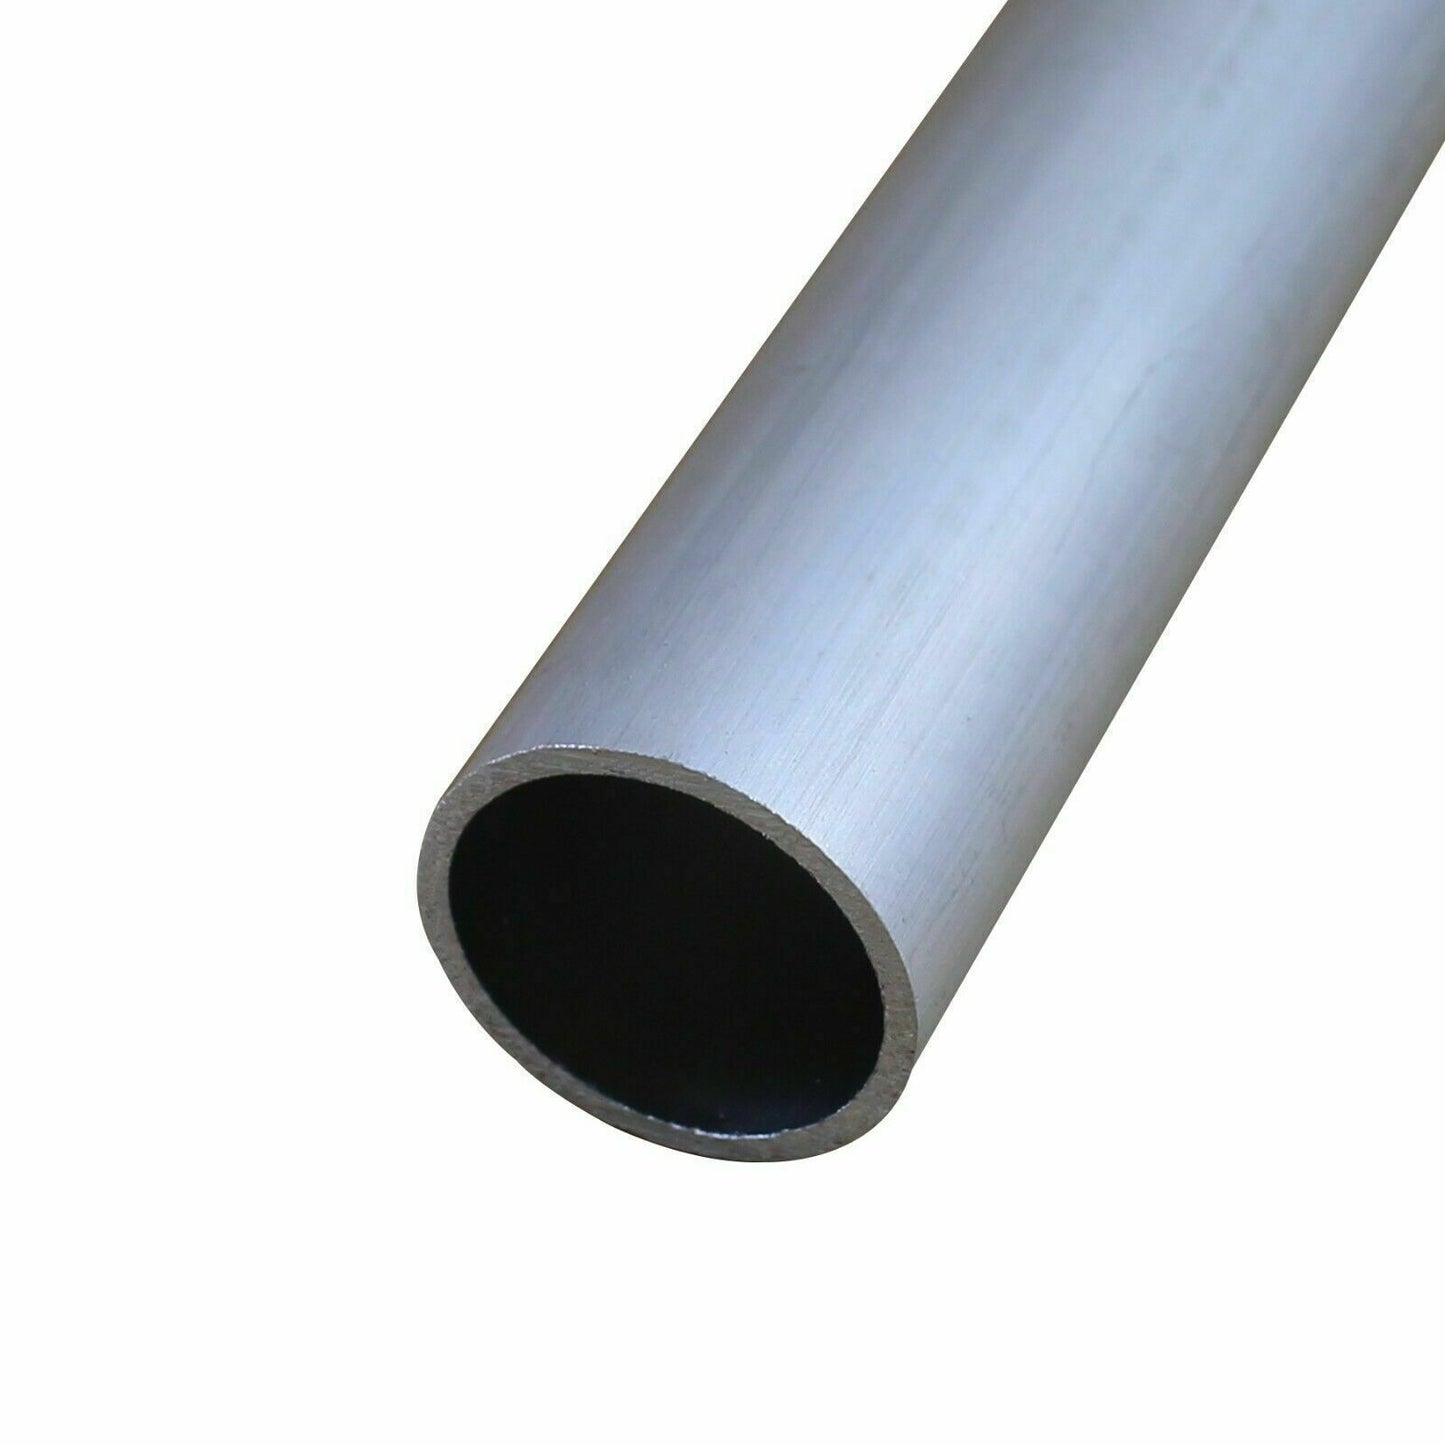 OD 40 mm ID 34 mm 1 pièce Tube rond en aluminium